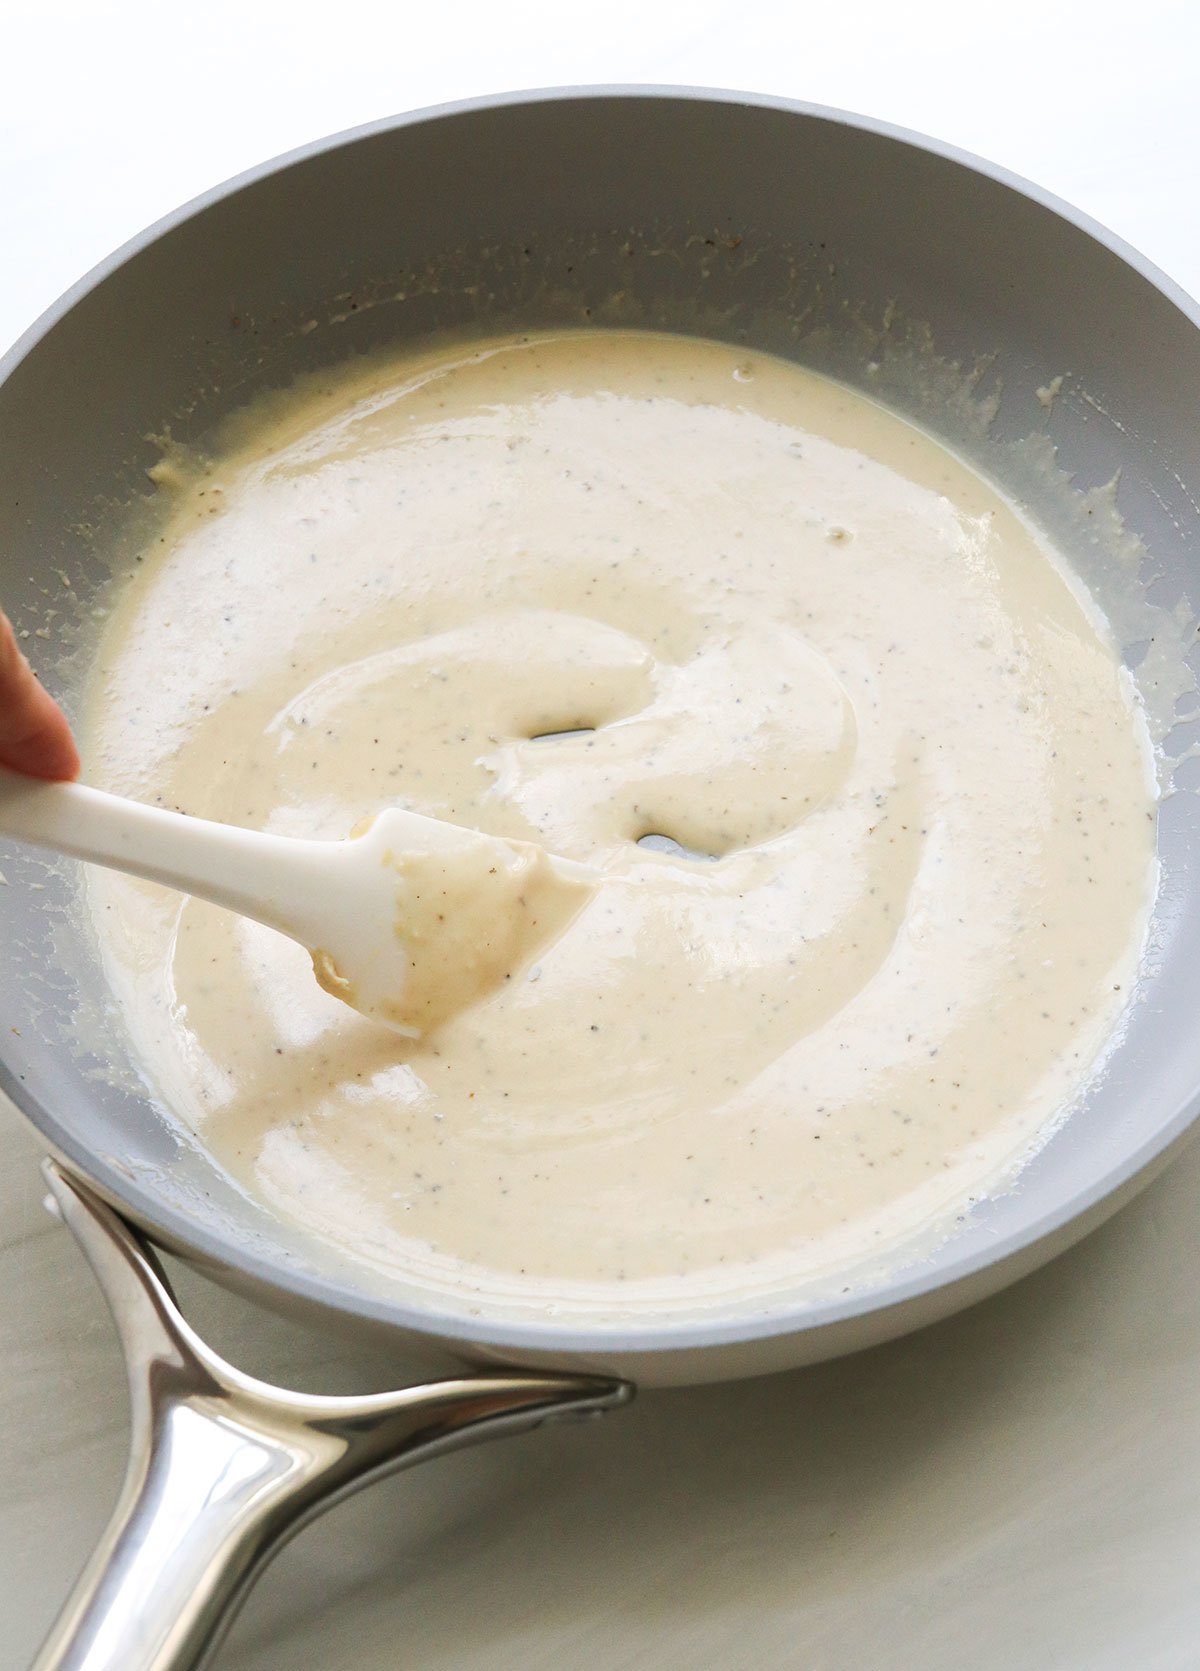 creamy hummus sauce in a gray skillet.